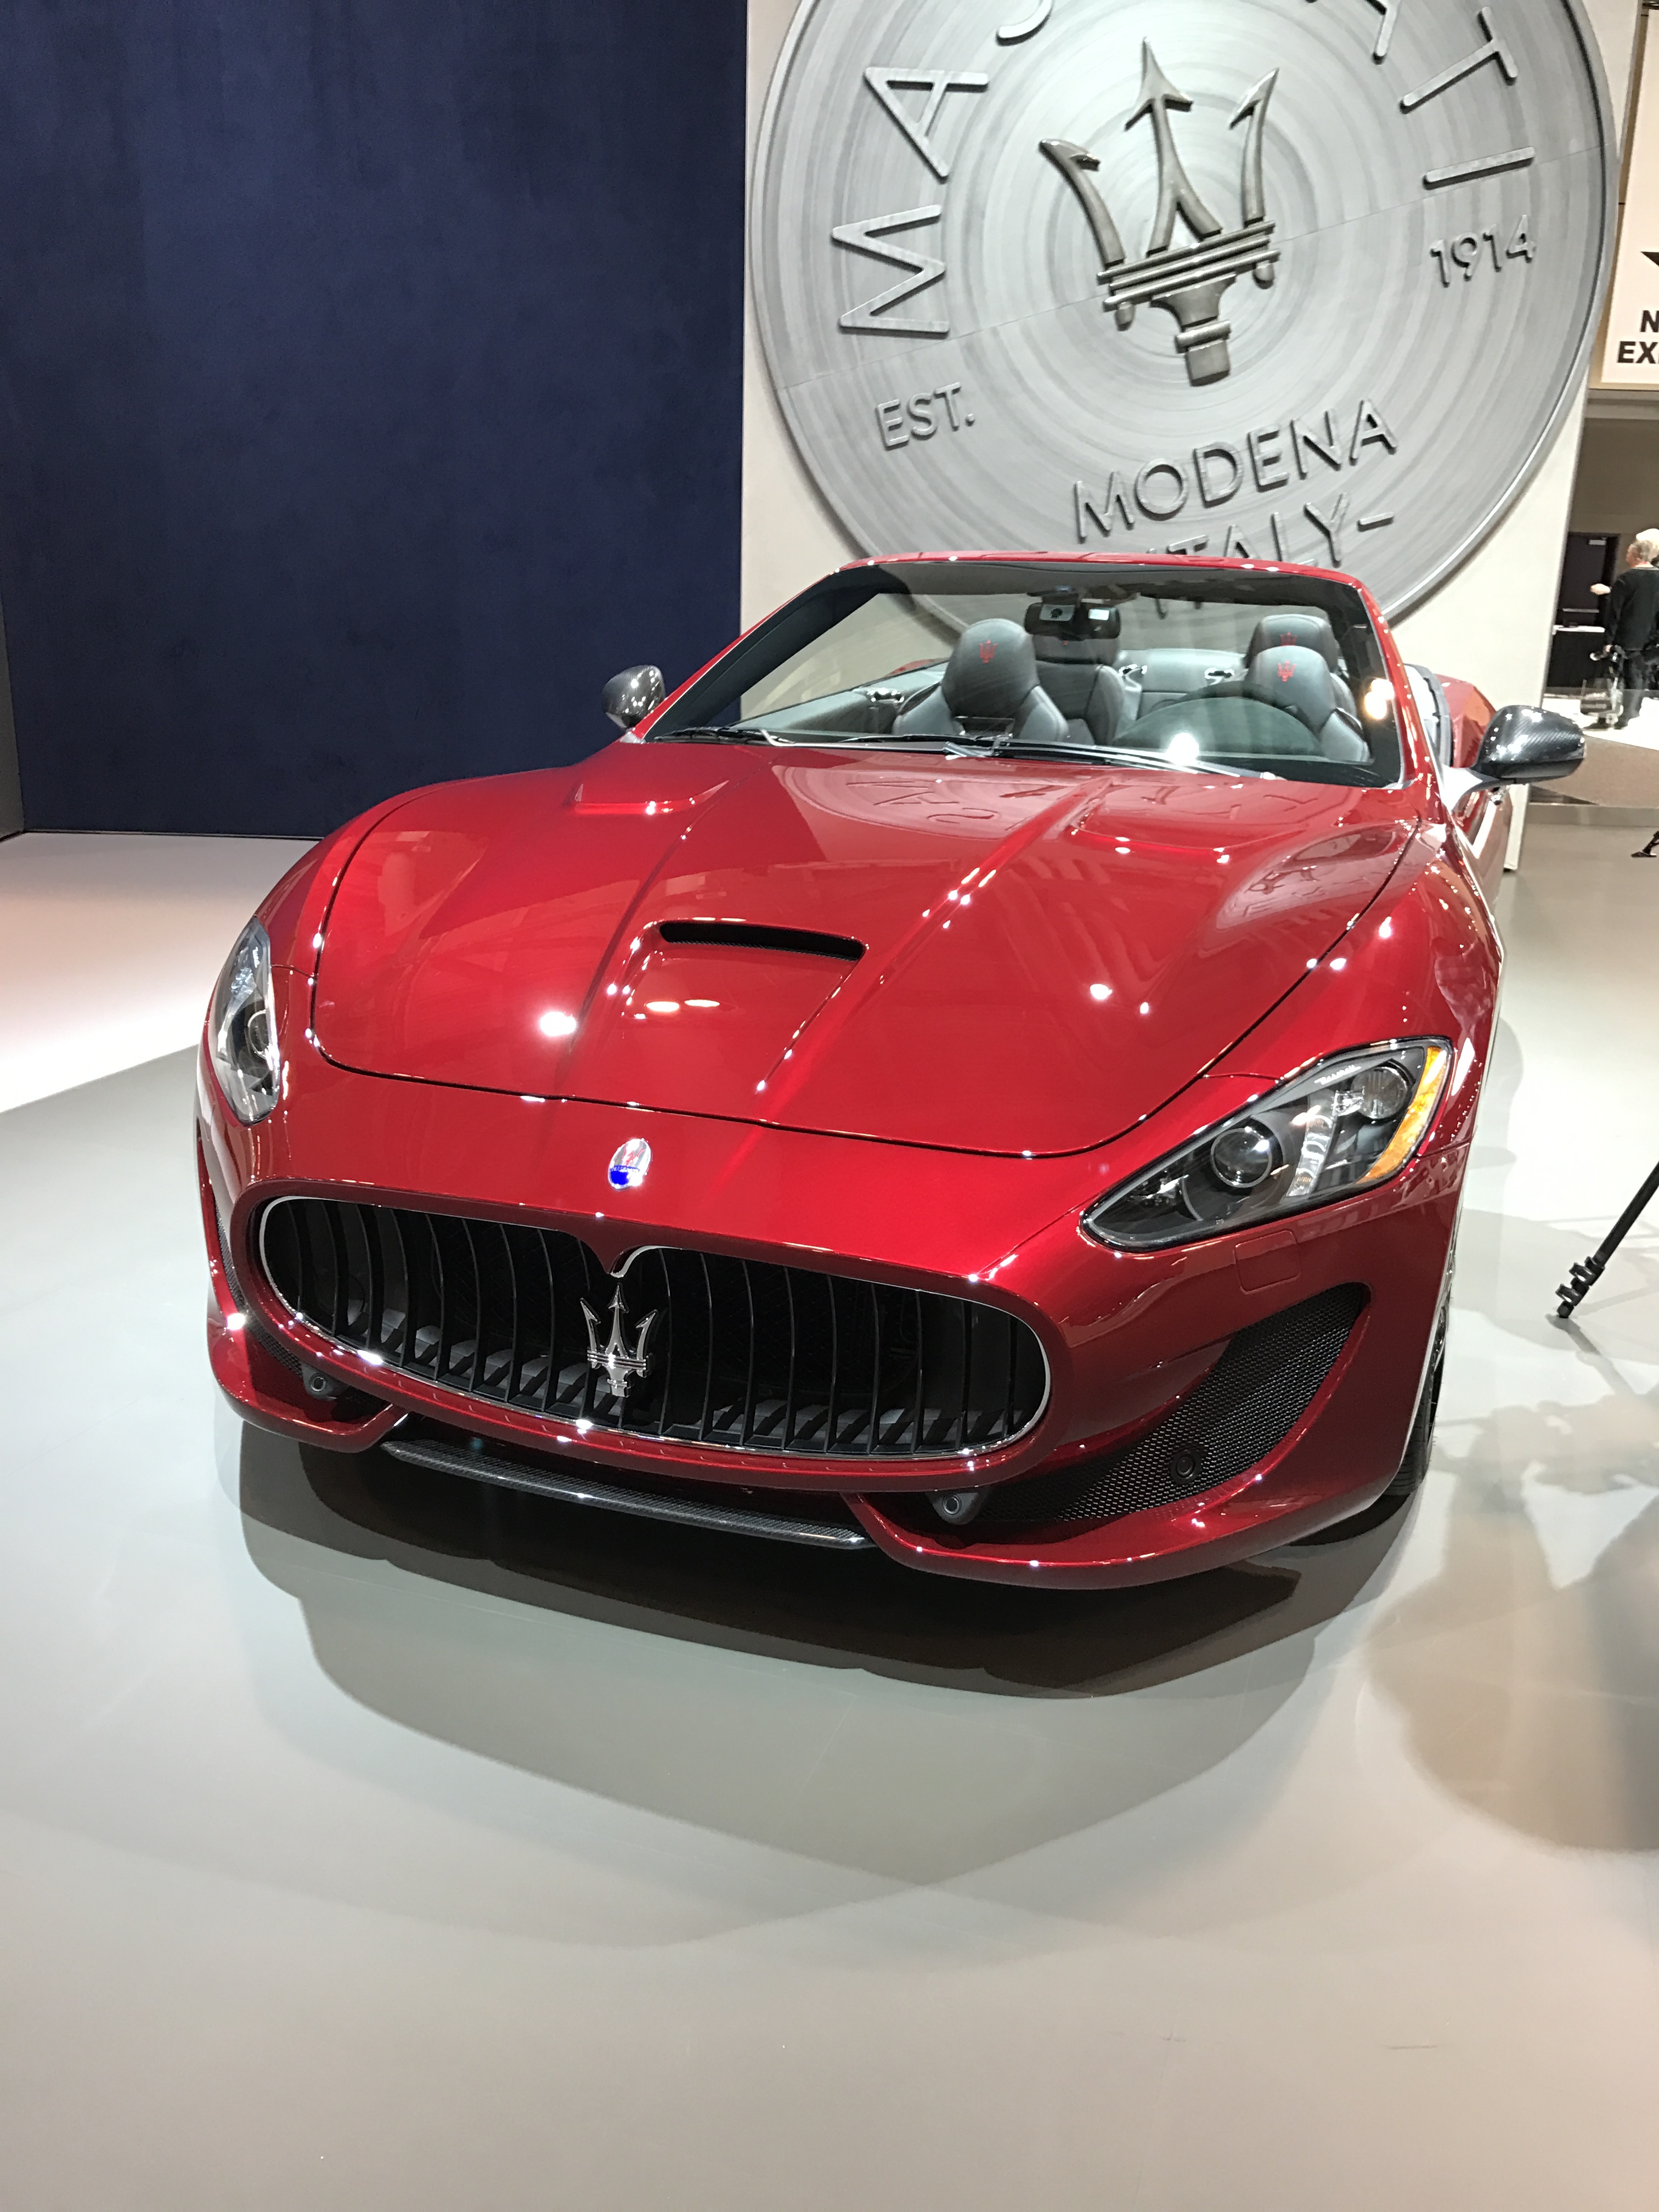 Maserati - Canadian International Autoshow #CIAS2017